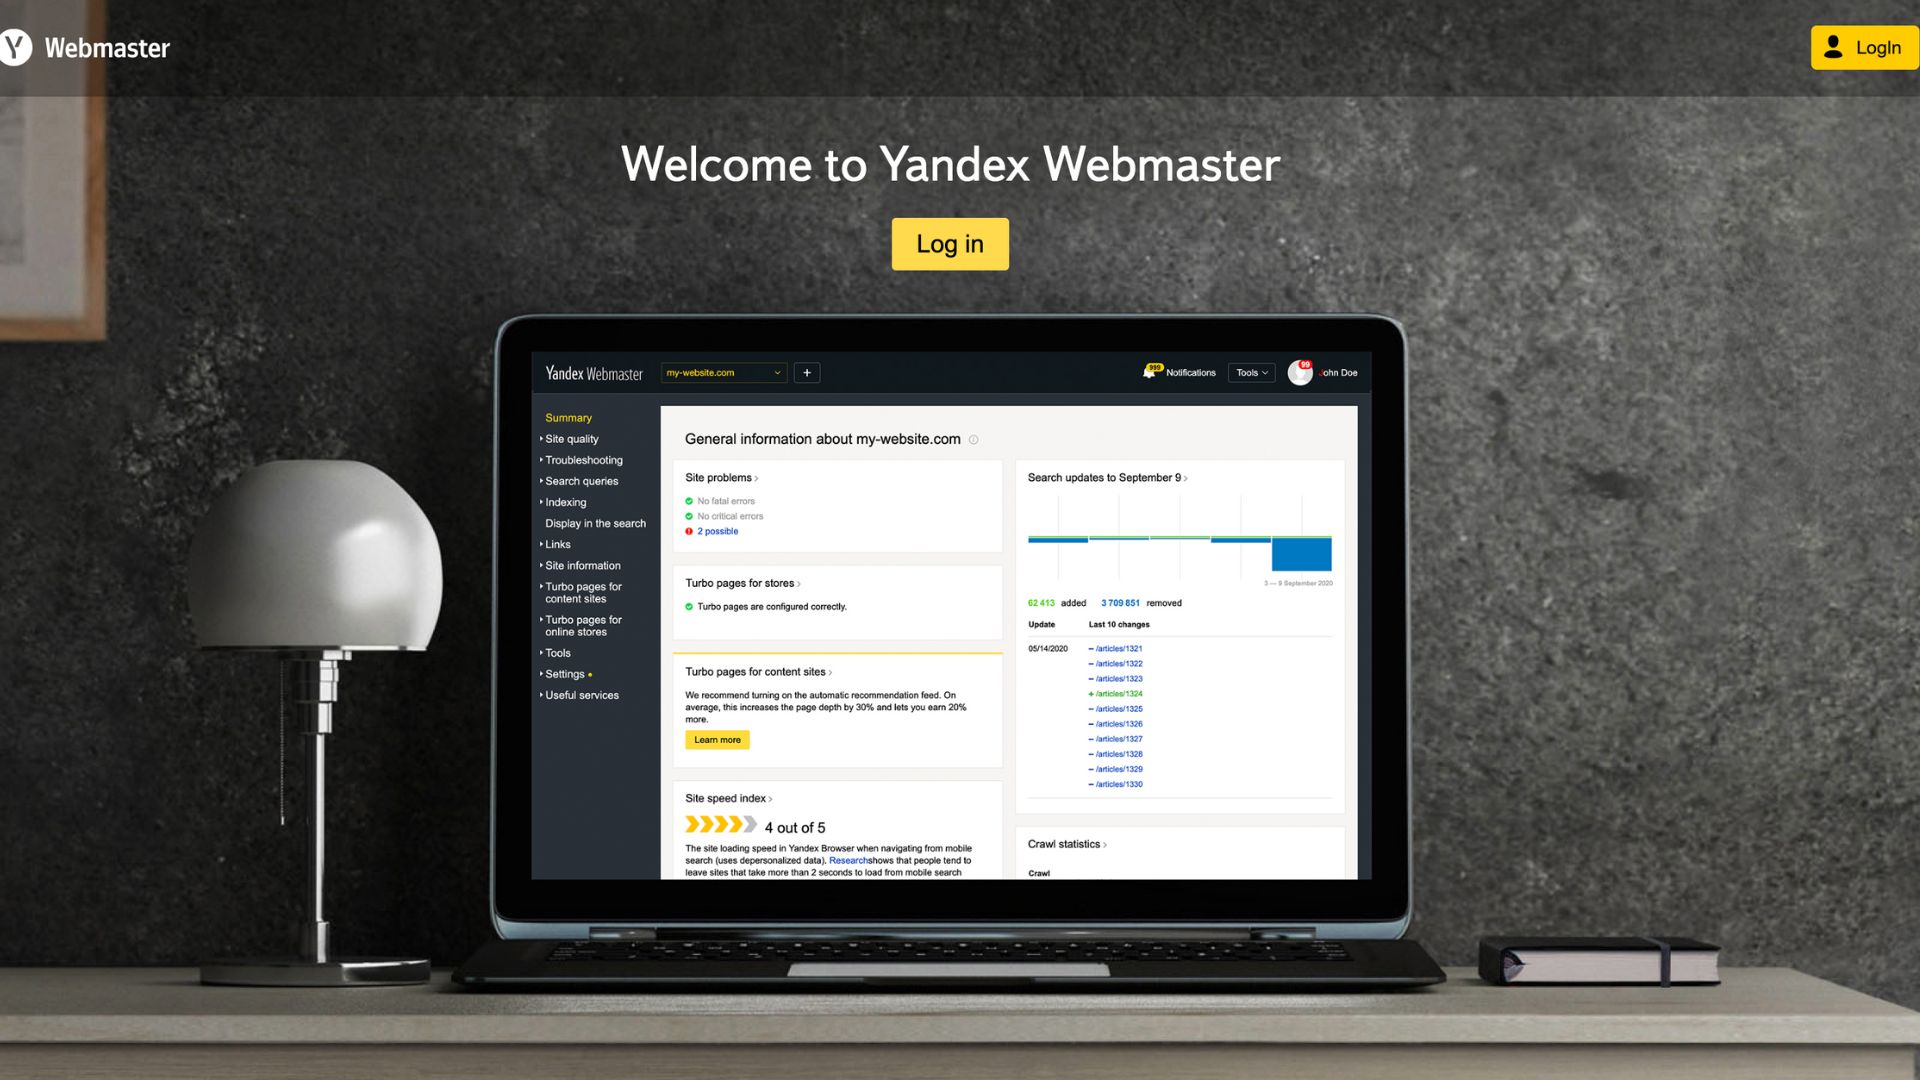 Yandex Webmaster login